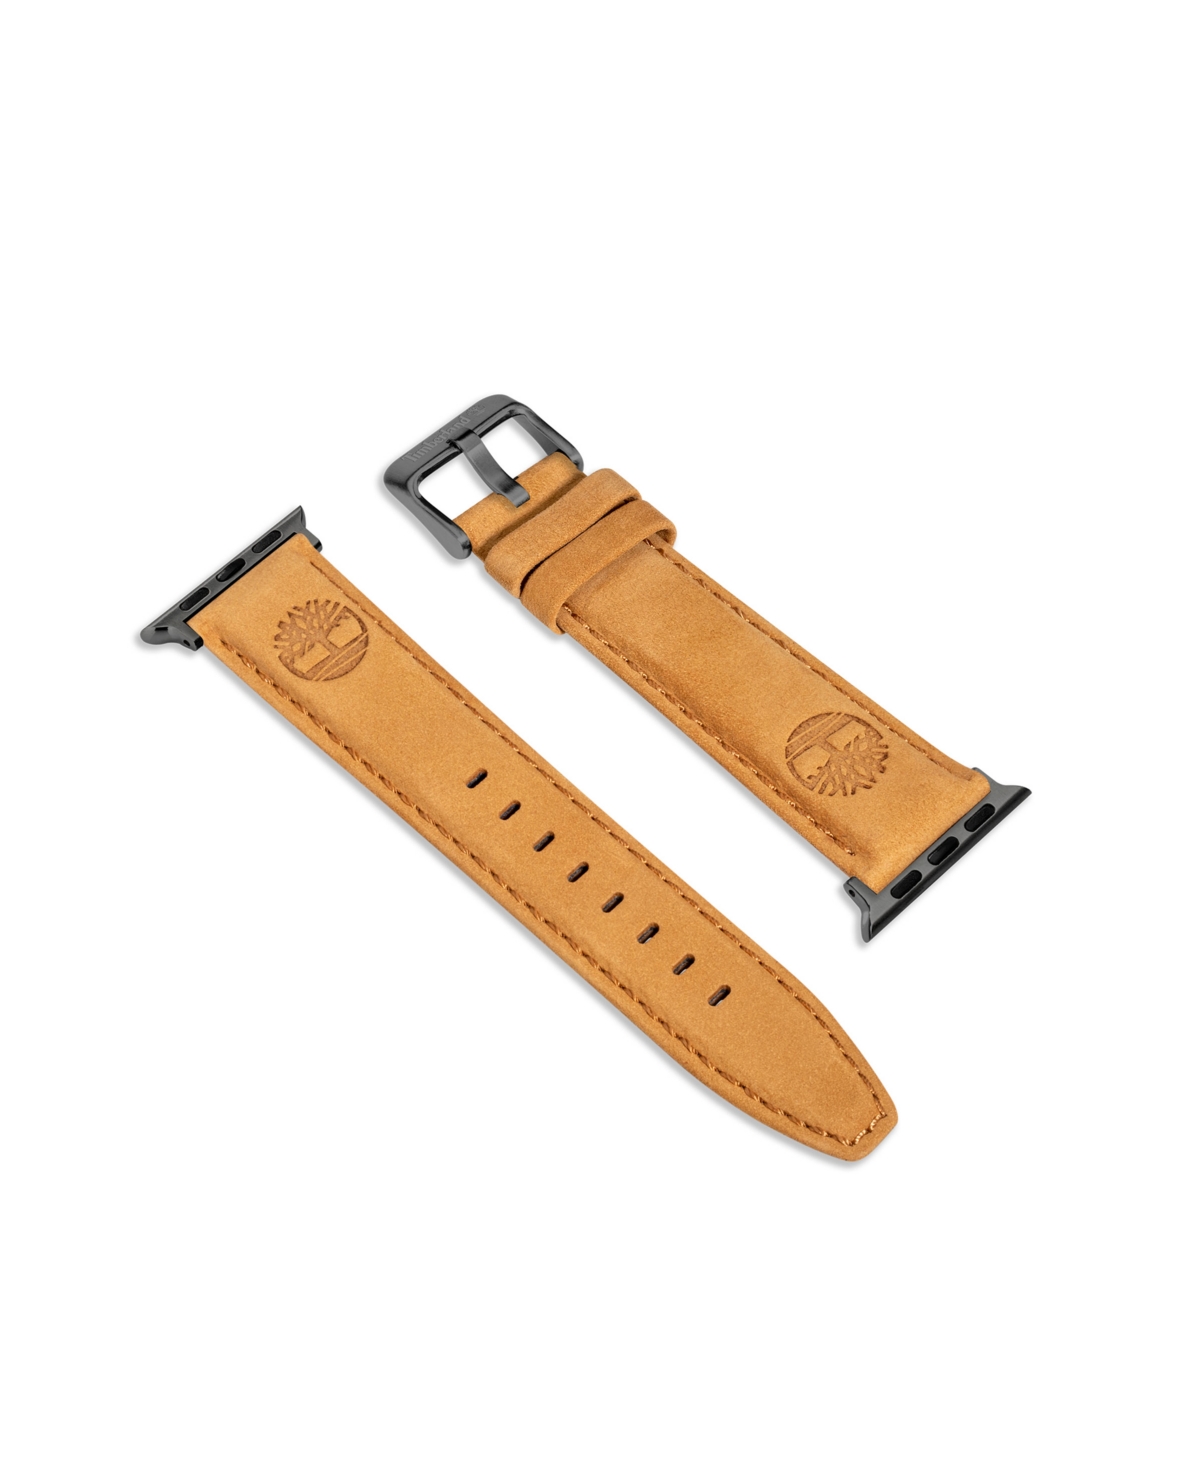 Unisex Lacandon Wheat Genuine Leather Universal Smart Watch Strap 20mm - Wheat